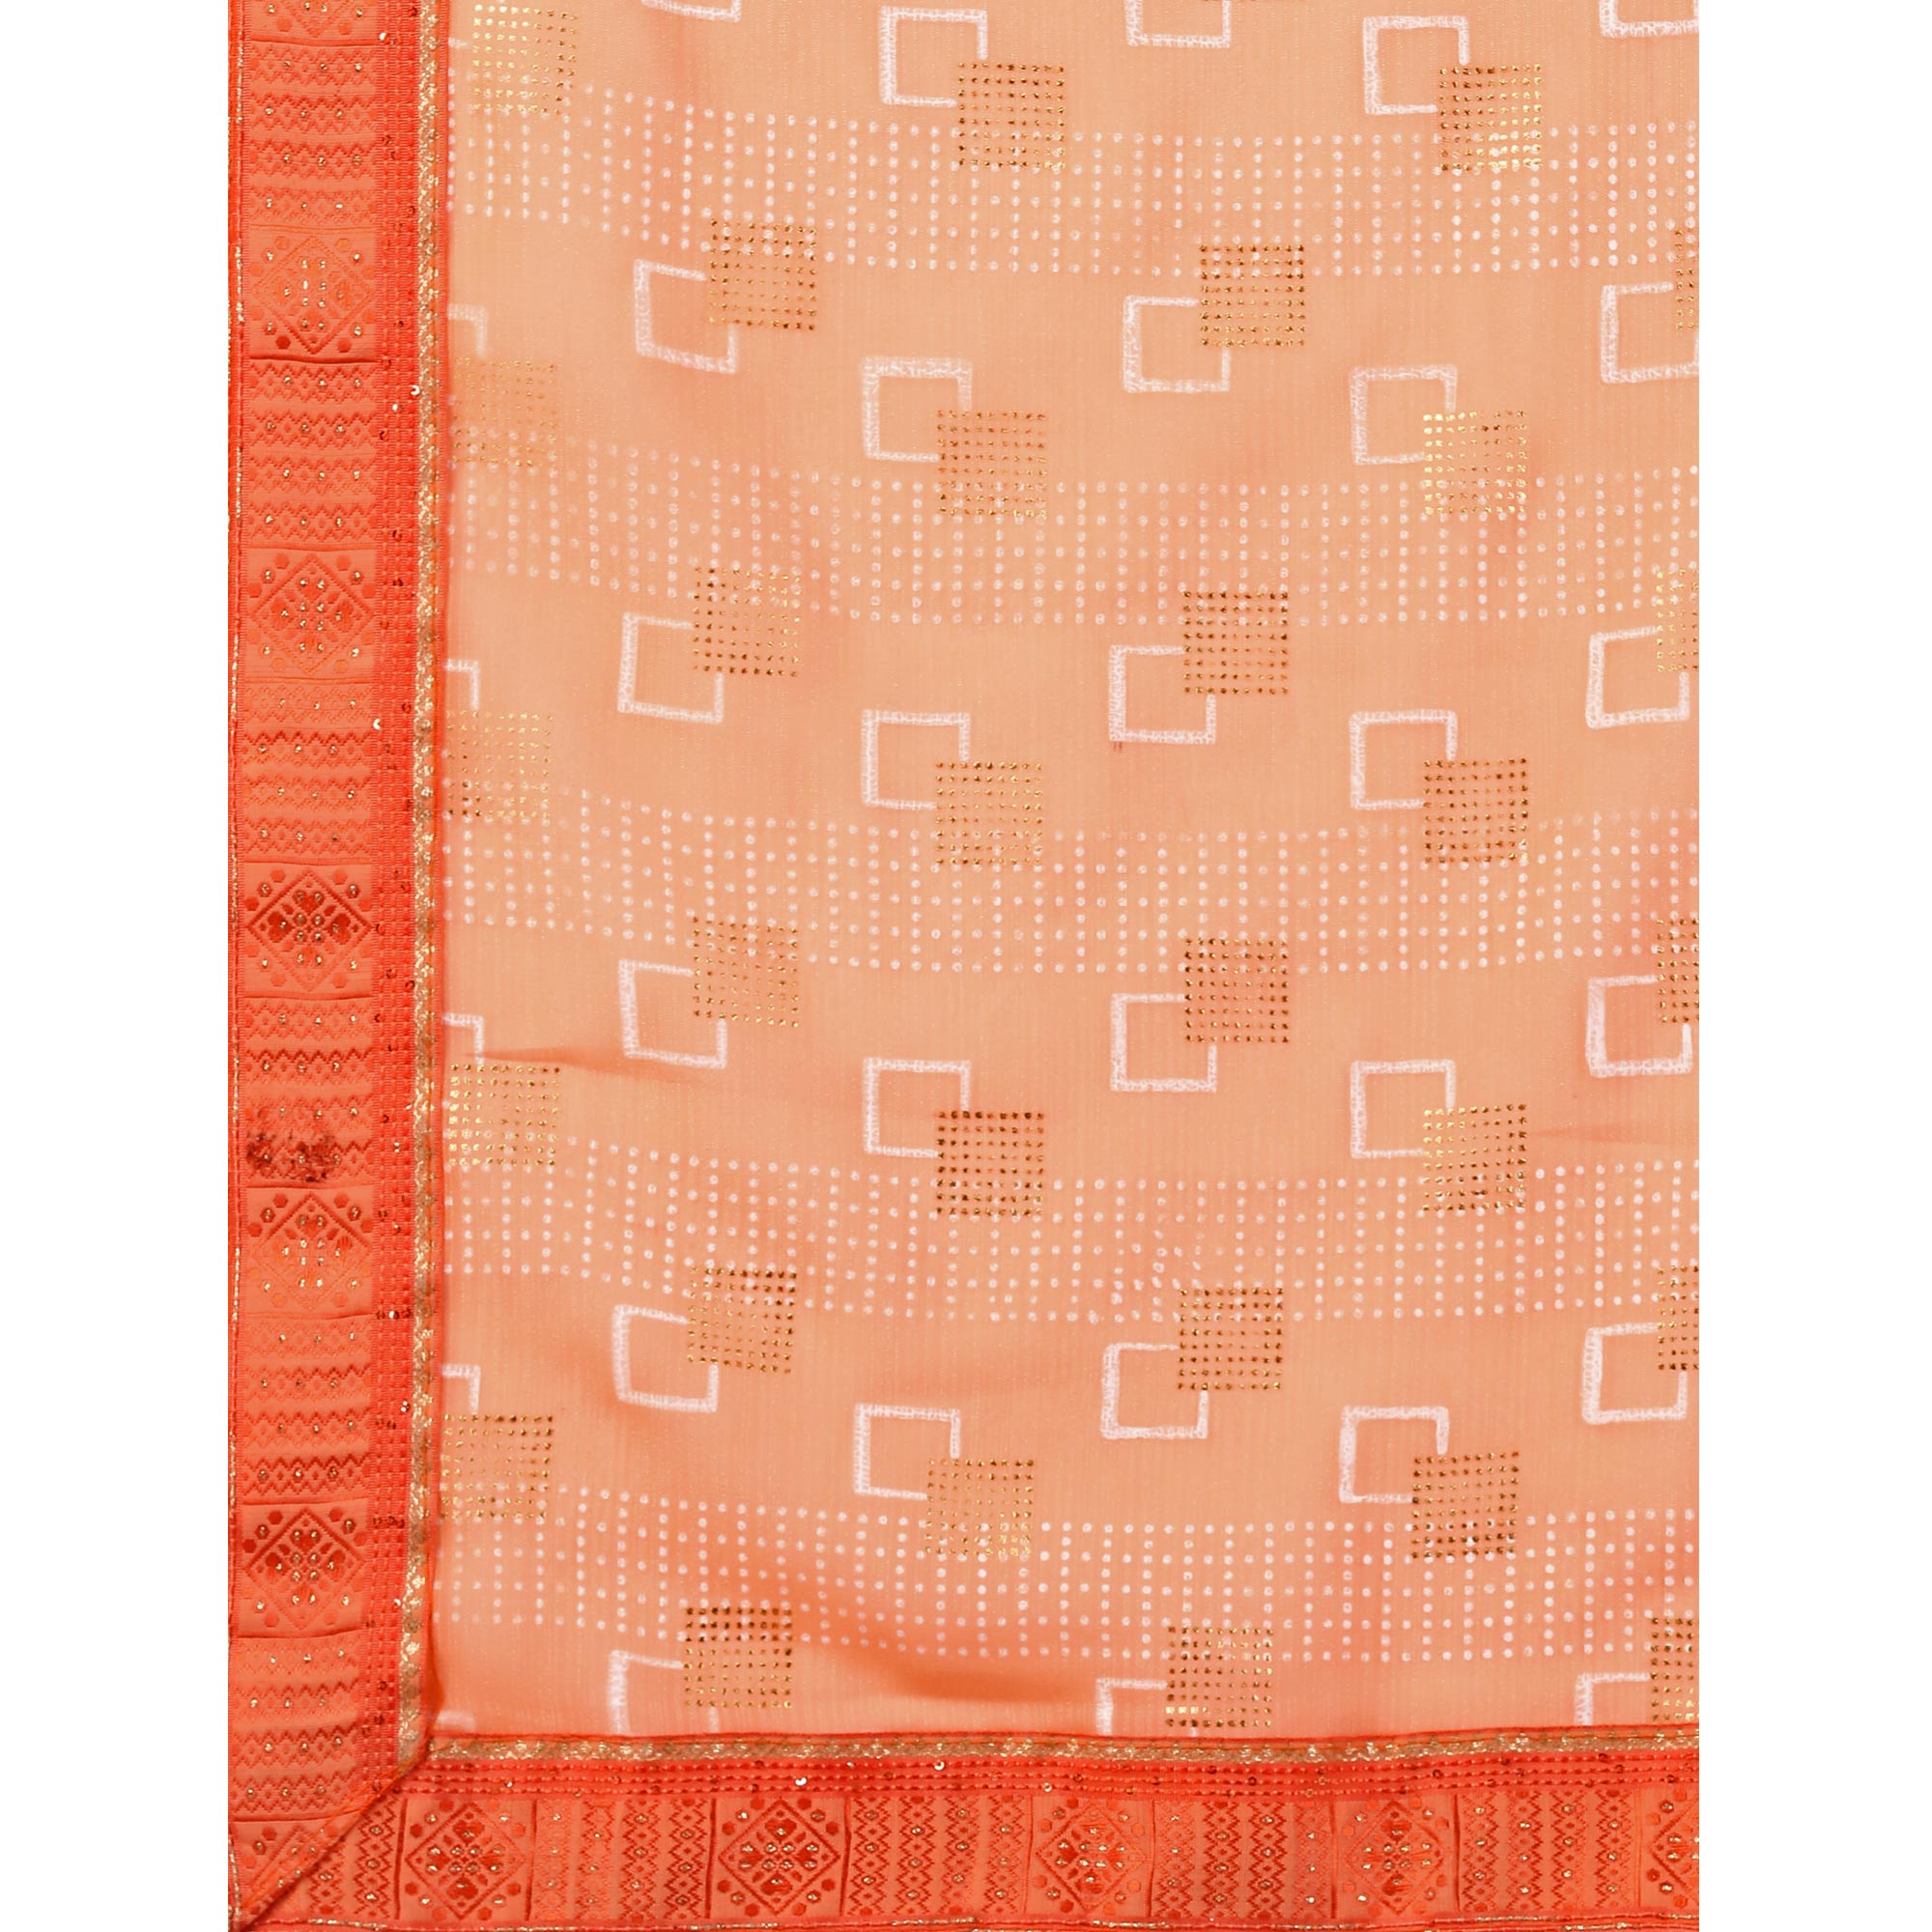 Peach Foil Printed Chiffon Saree With Lace Border